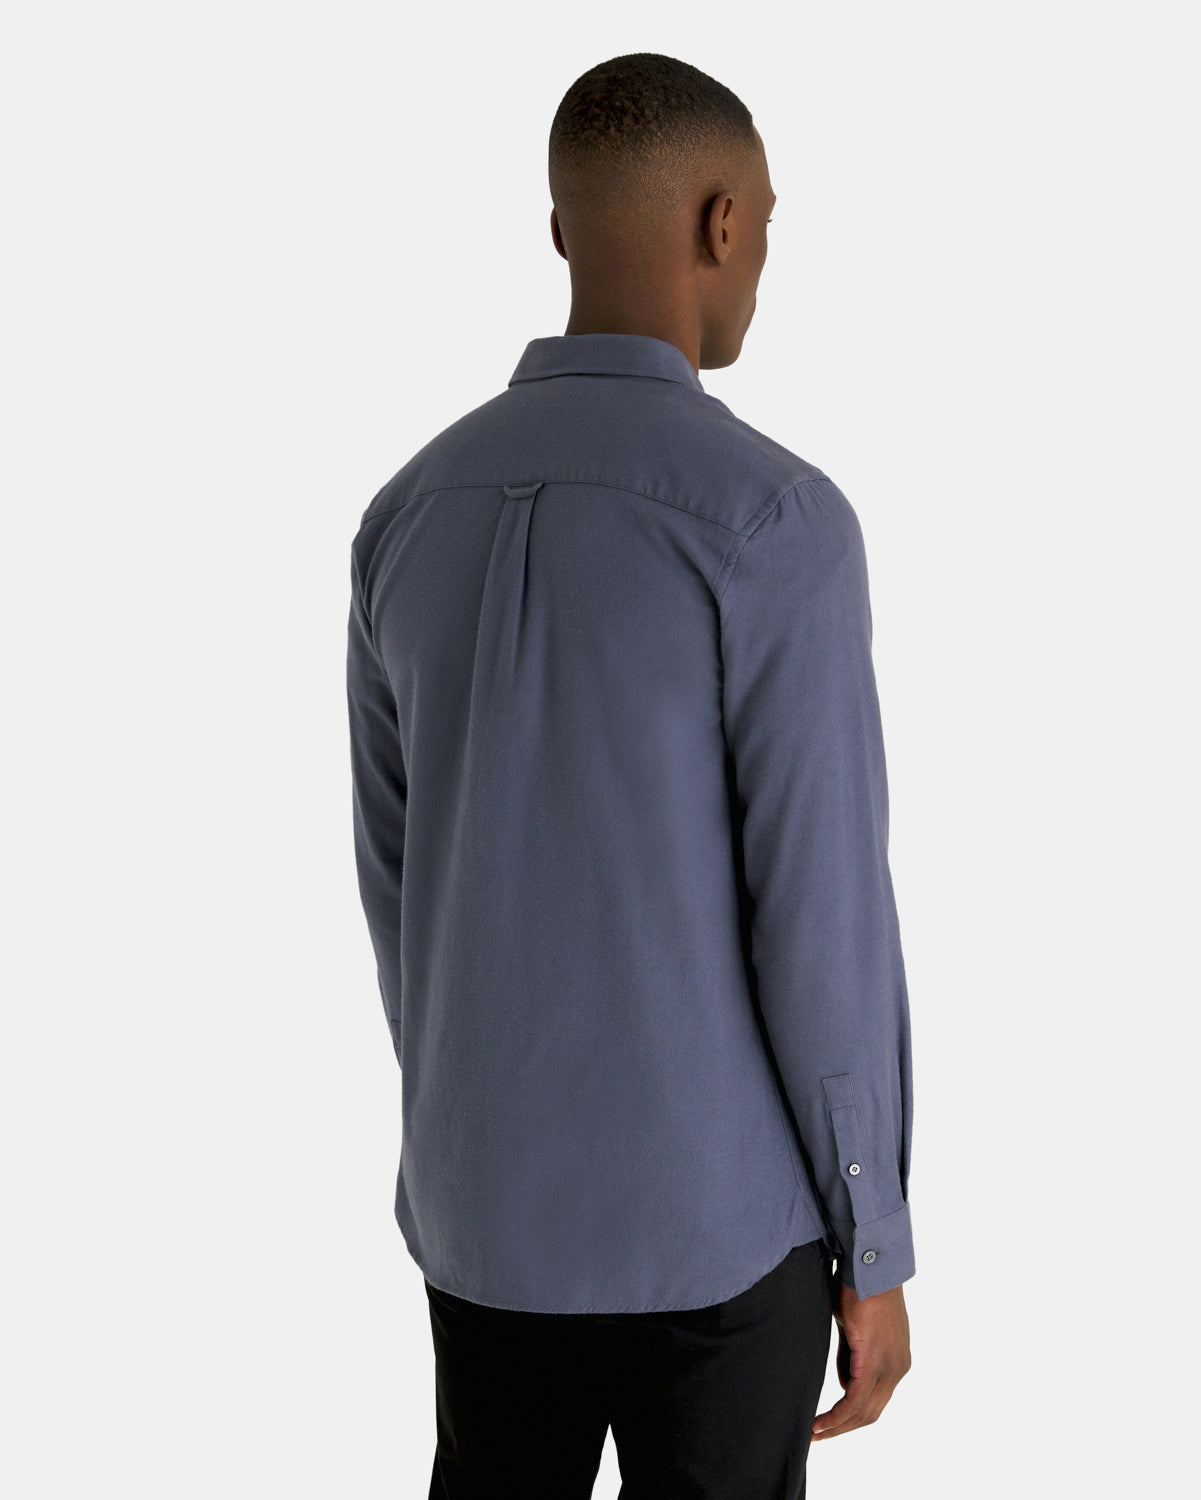 Plain flannel shirt - gunmetal